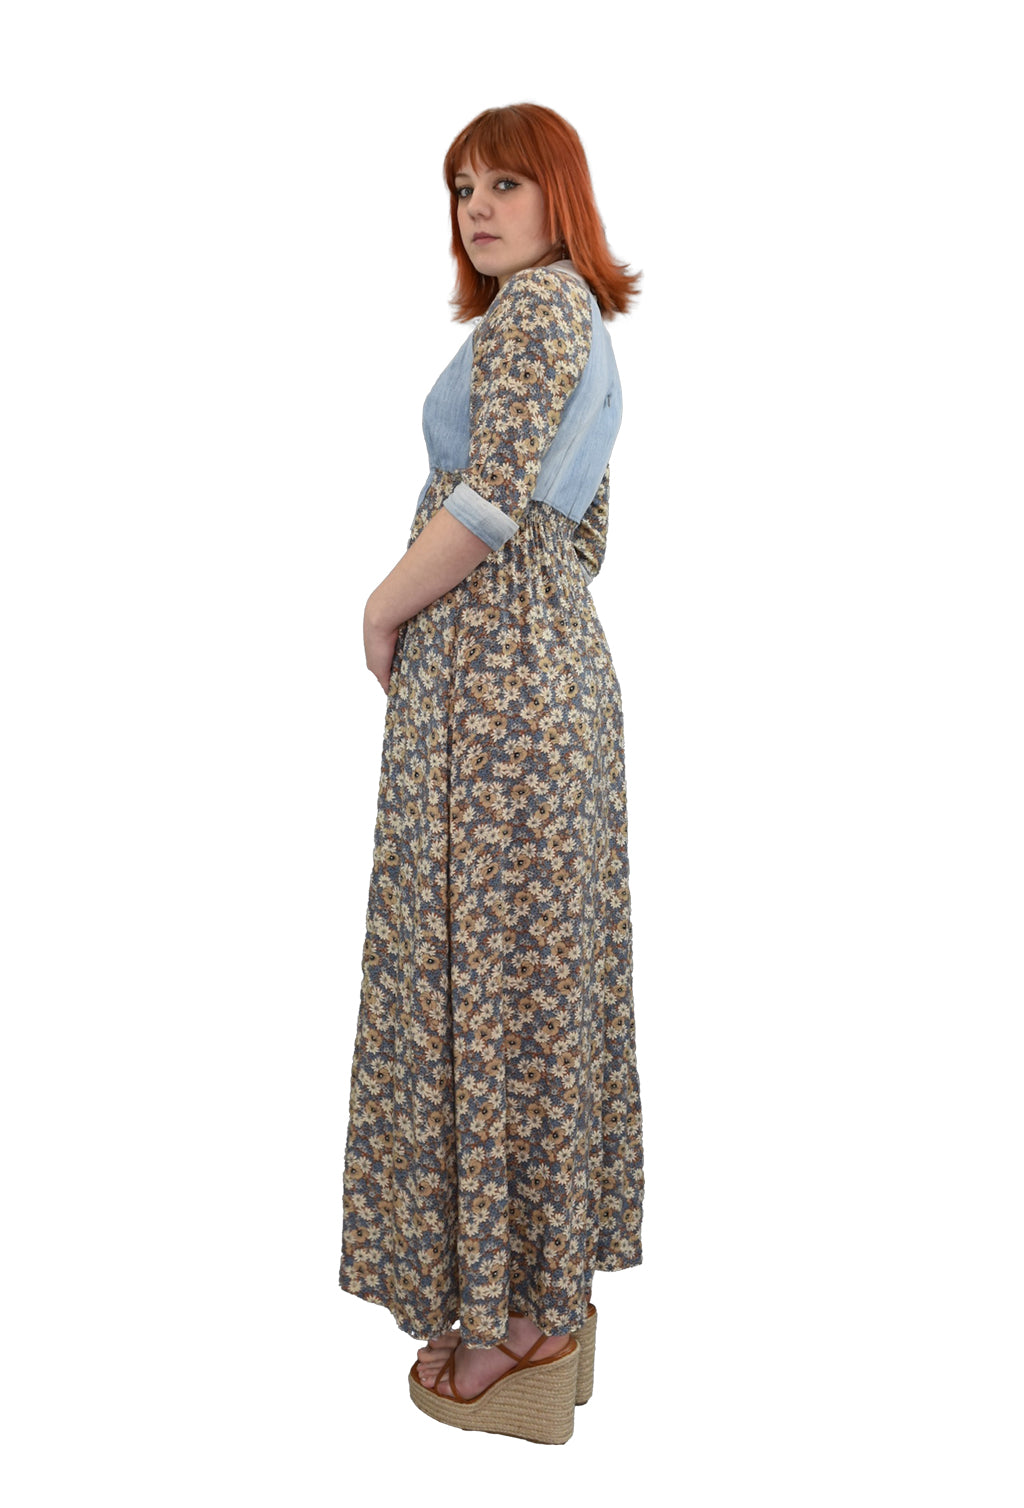 1970's Handmade Floral Cotton Chambray Prairie Dress | Vintage